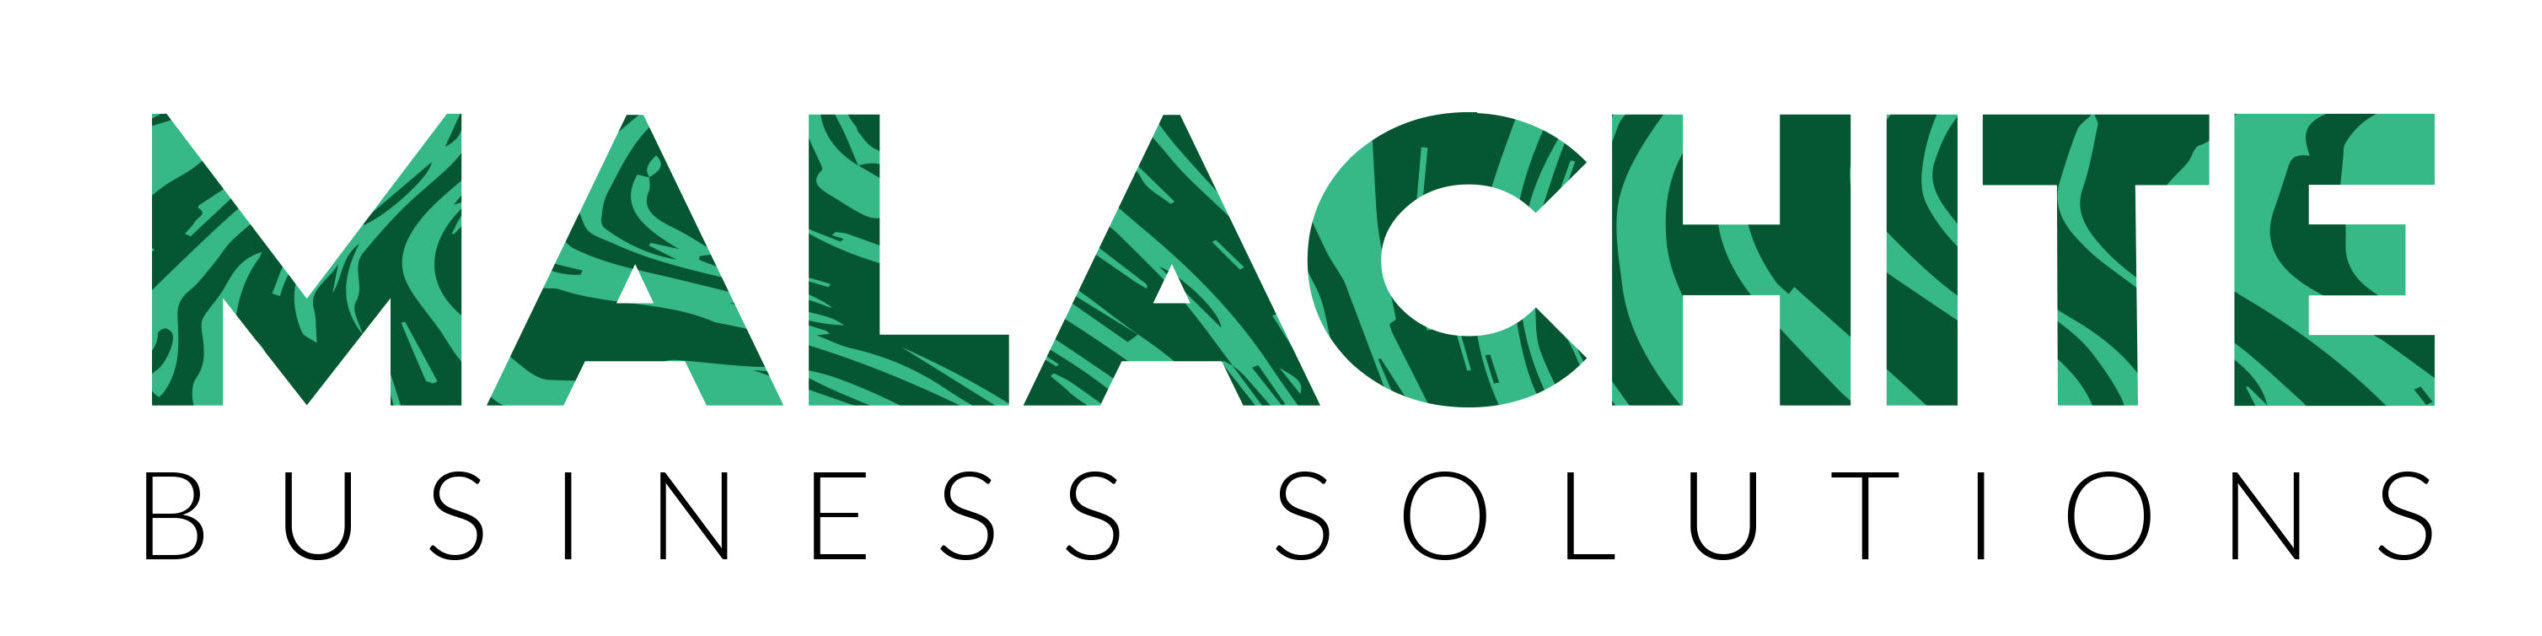 Malachite Business Solutions - Malachite Business Solutions, Digital Agency Miami